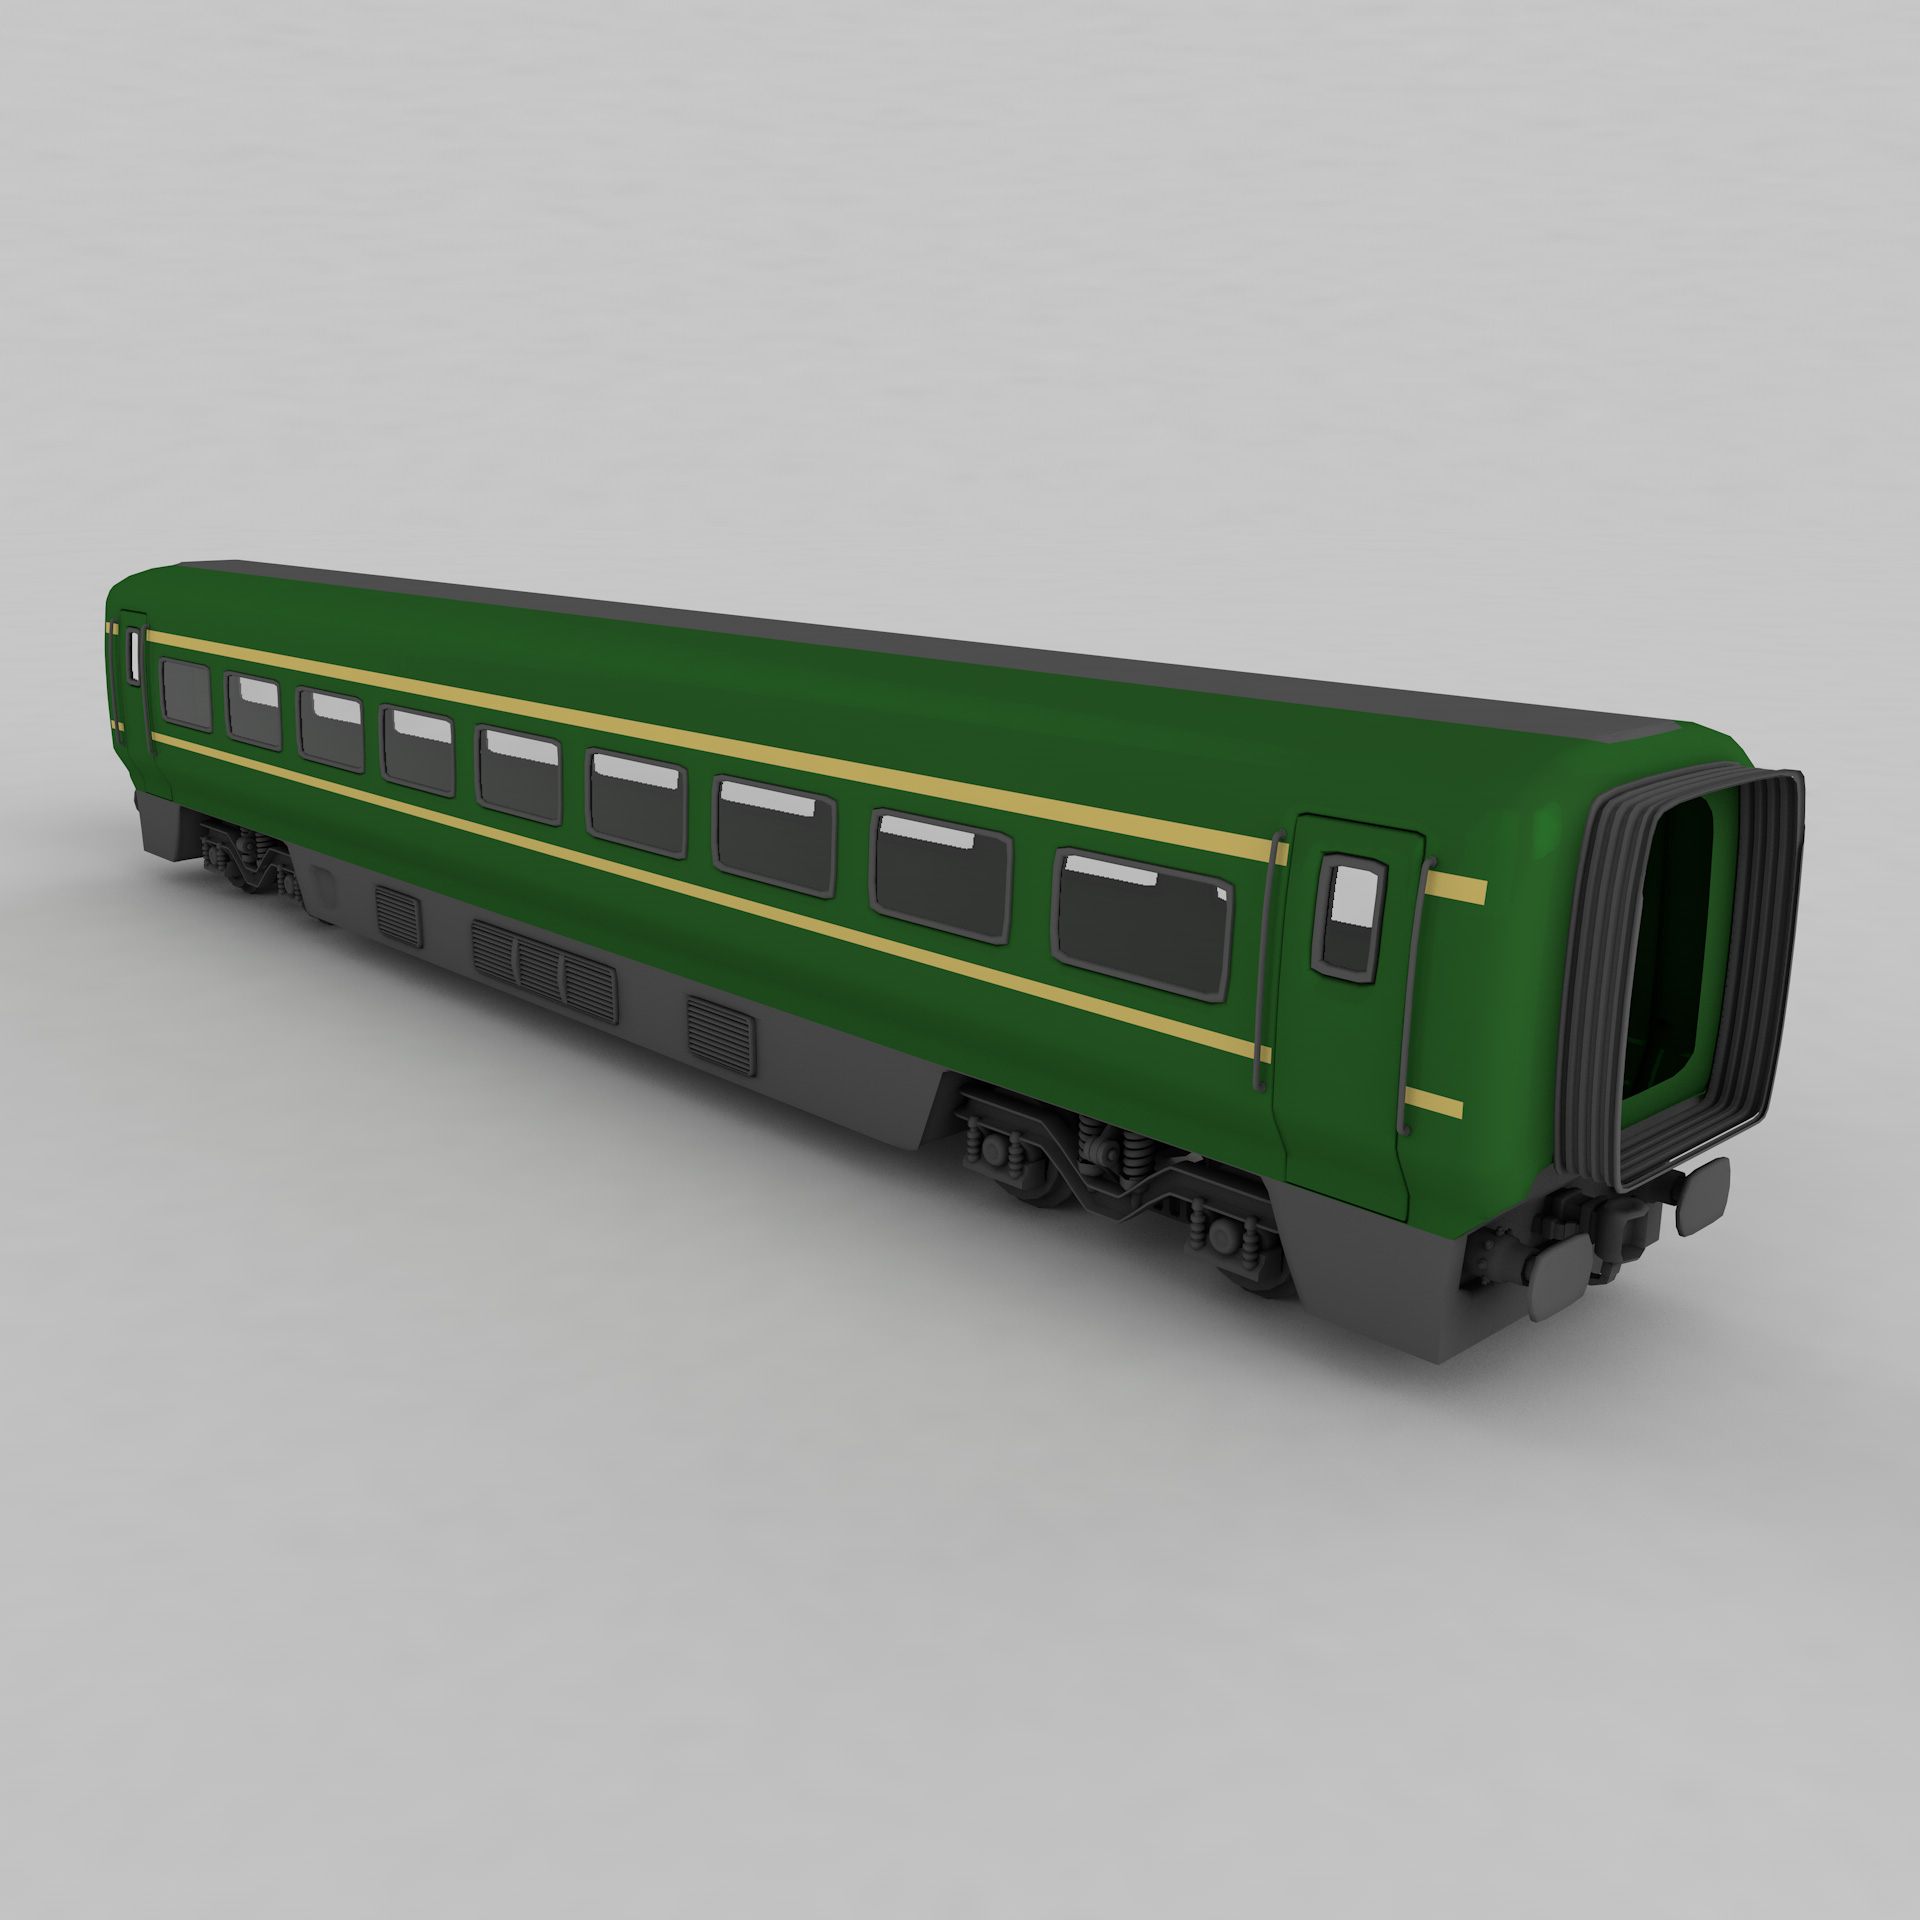 Green train 3d model